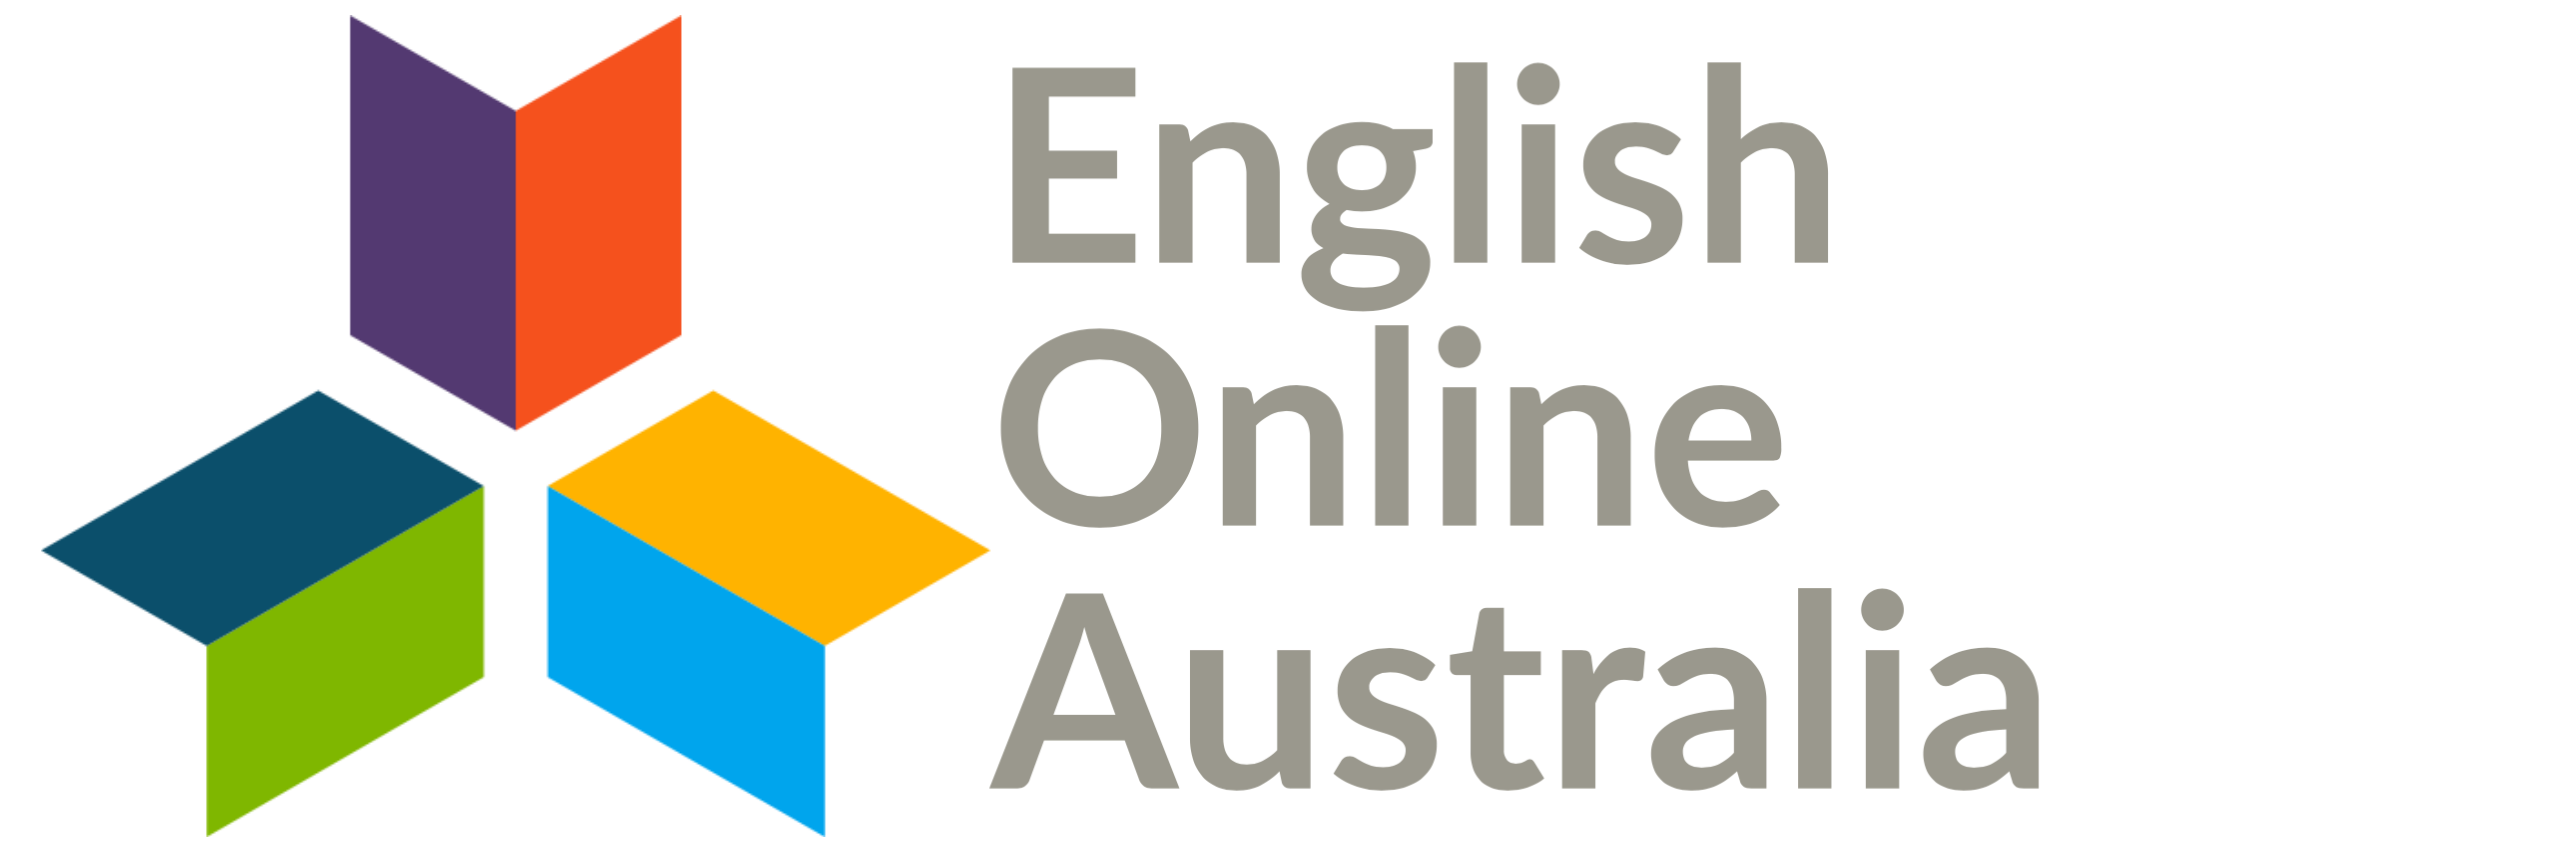 English Online Australia